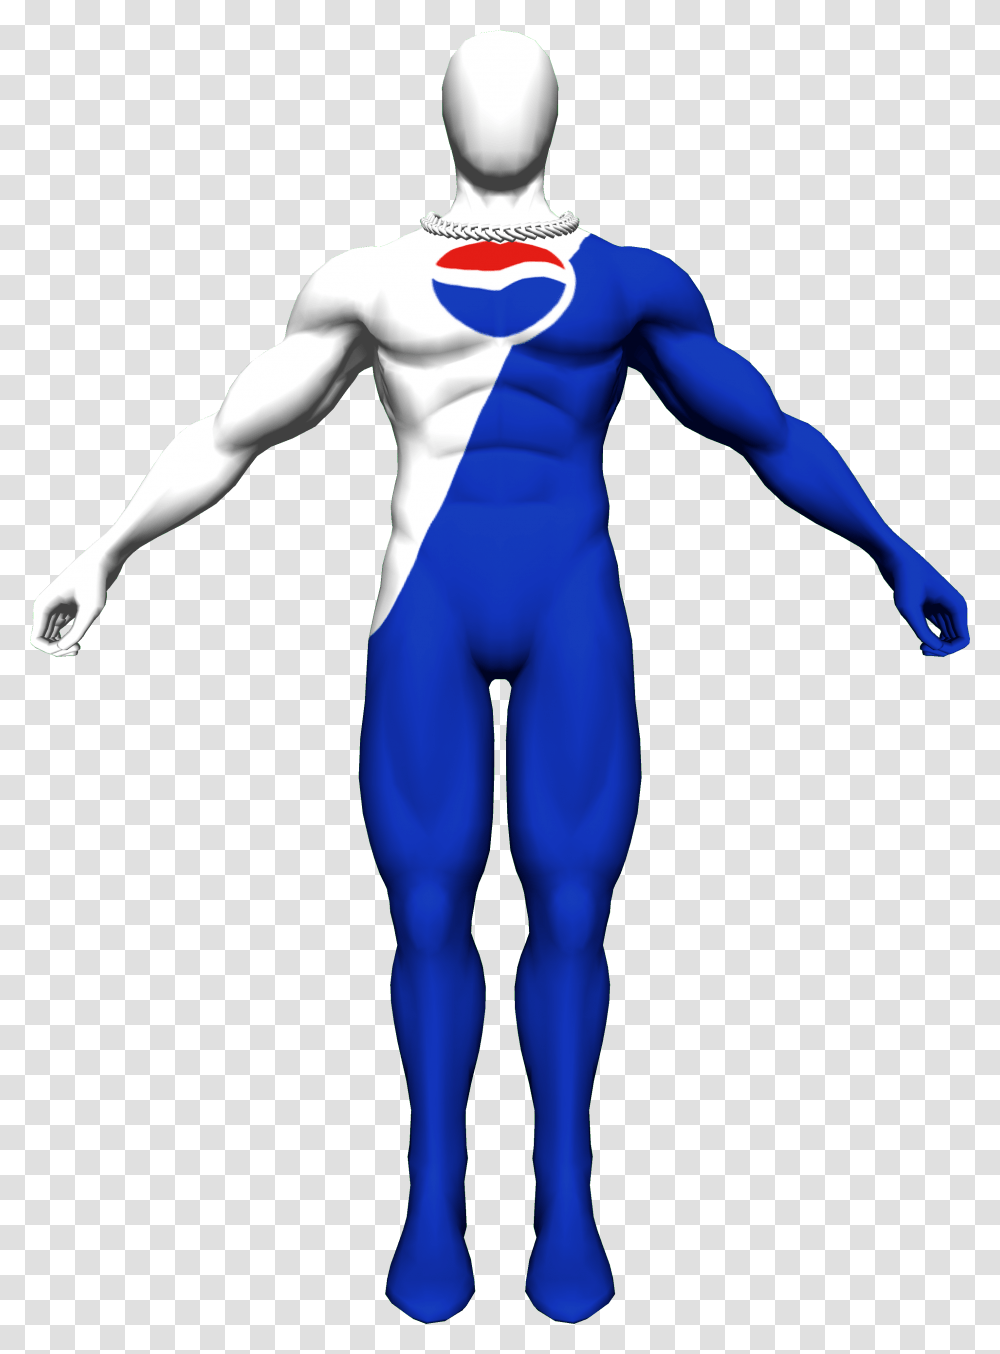 Pepsi Man Fbt Pepsi Man, Person, Sphere, Long Sleeve Transparent Png